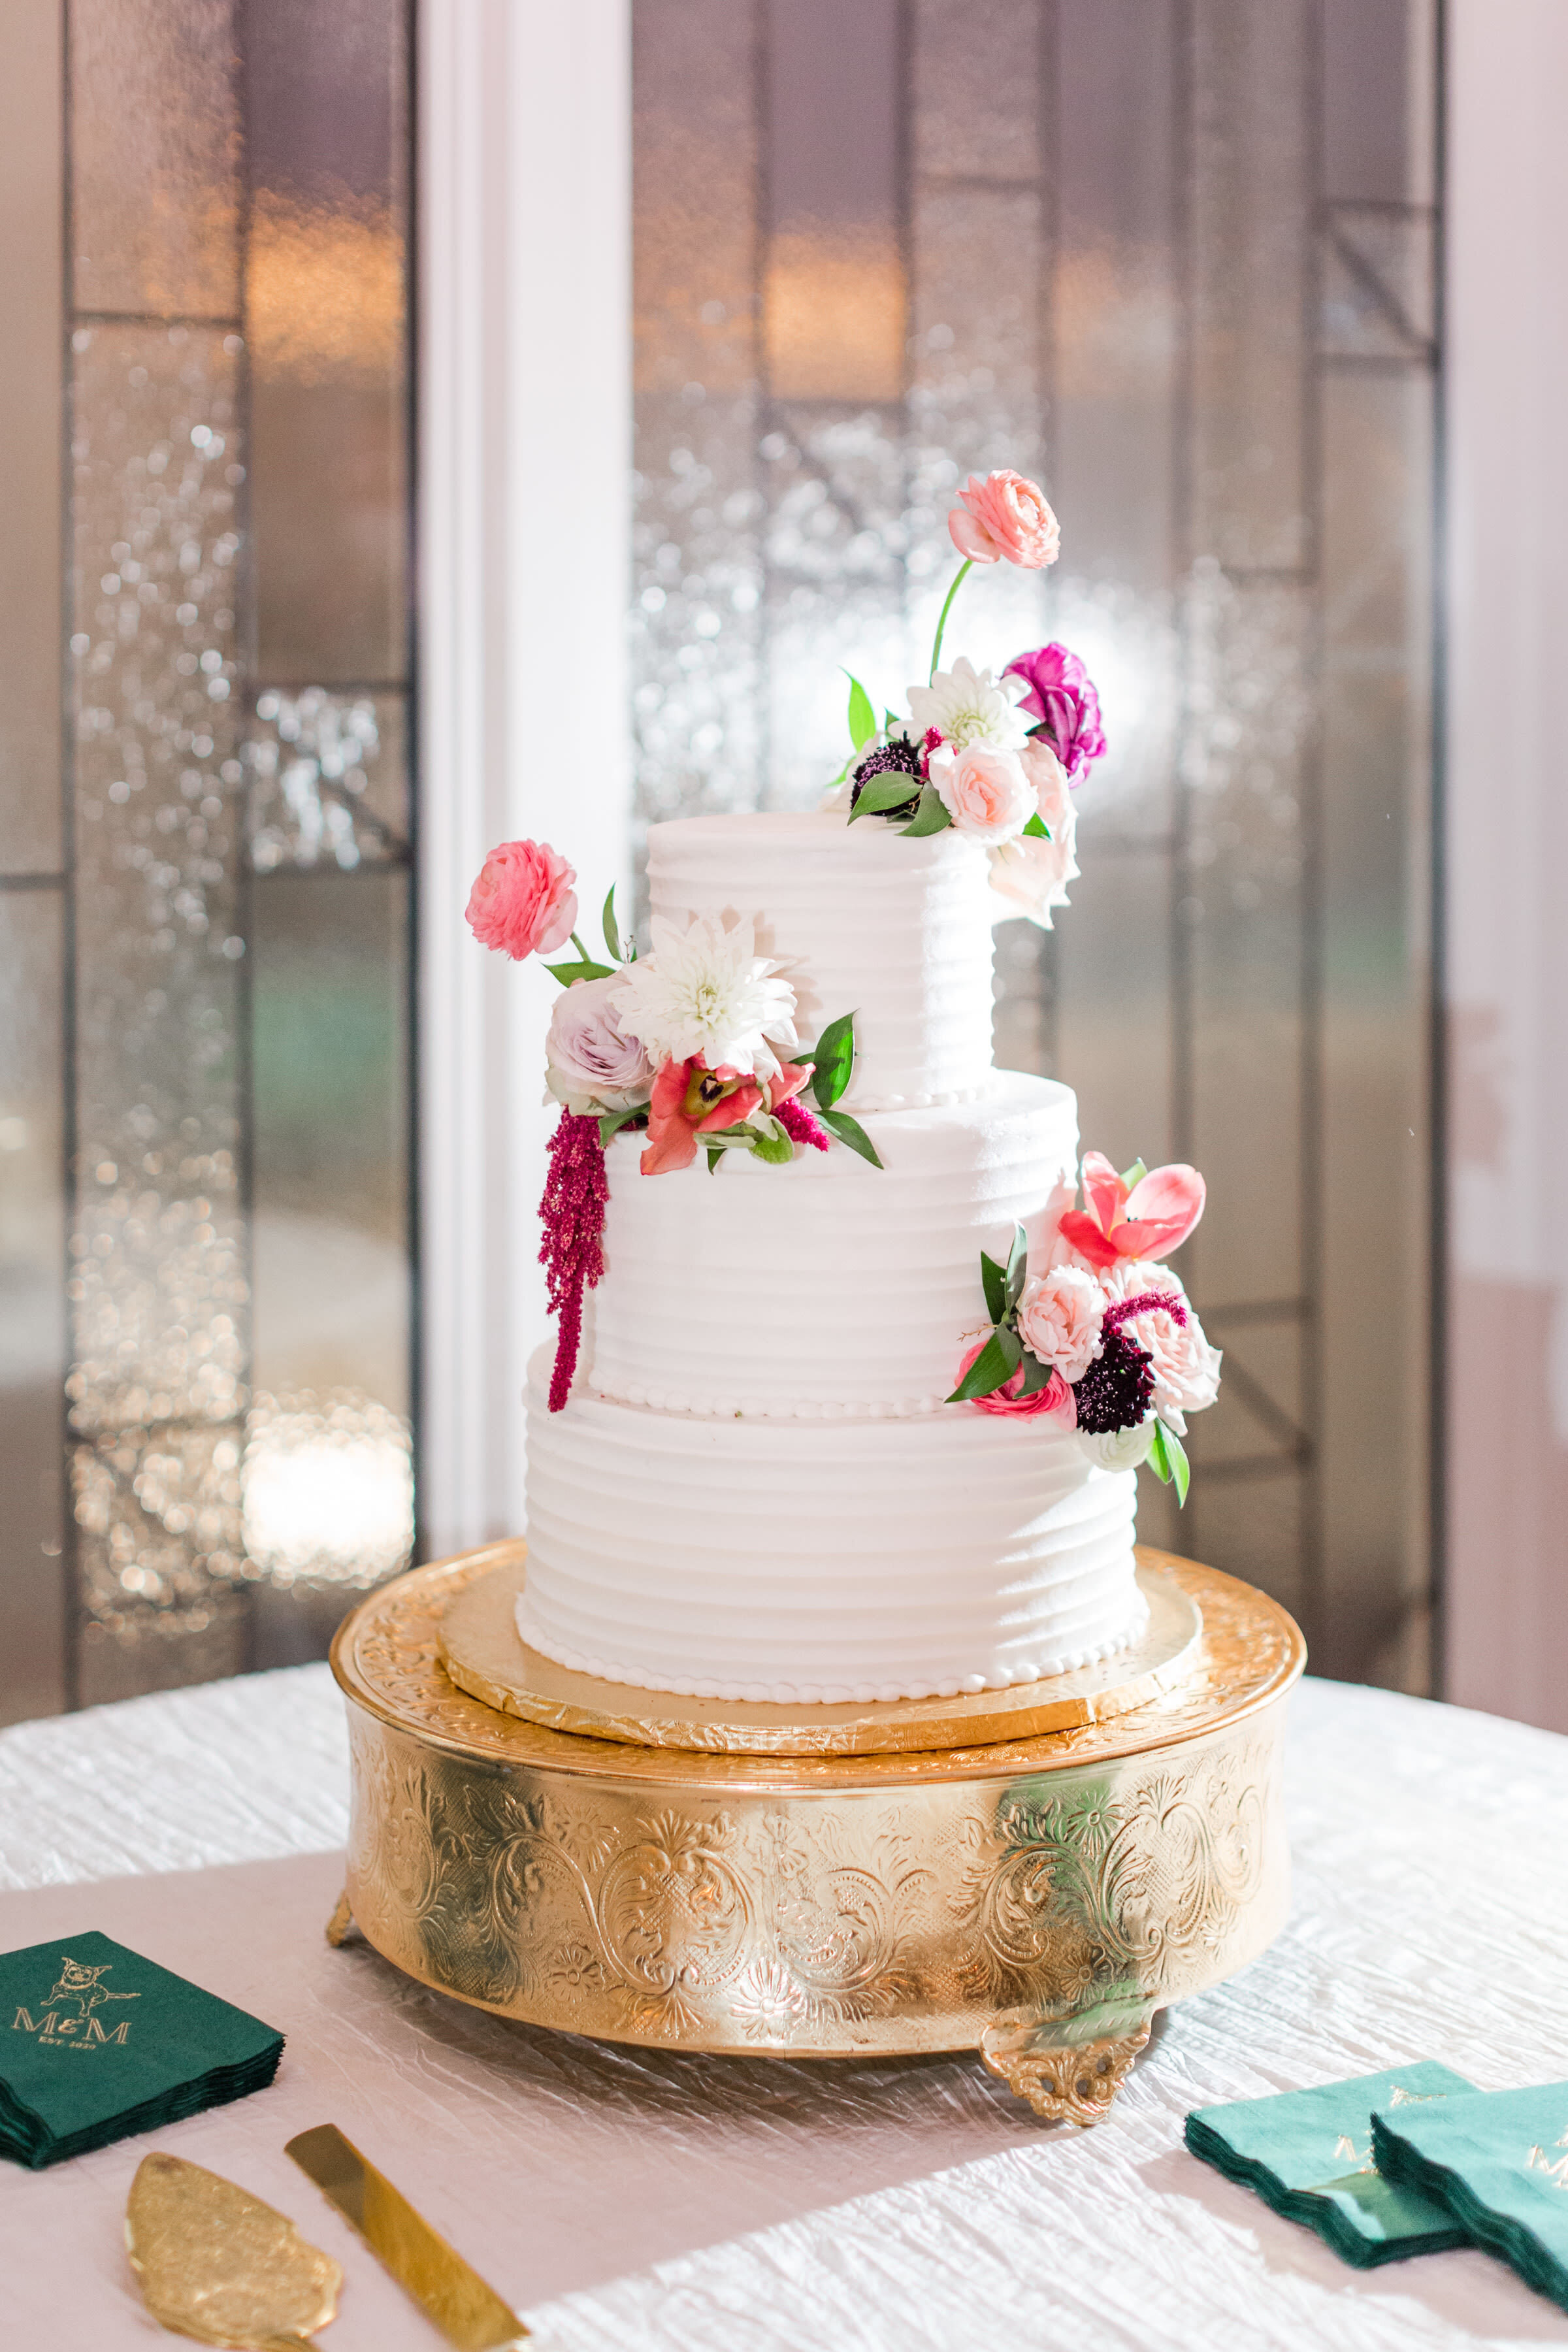 memphis-wedding-florist-venue-atrium-tables-pink-red-hydrangeas-flowers